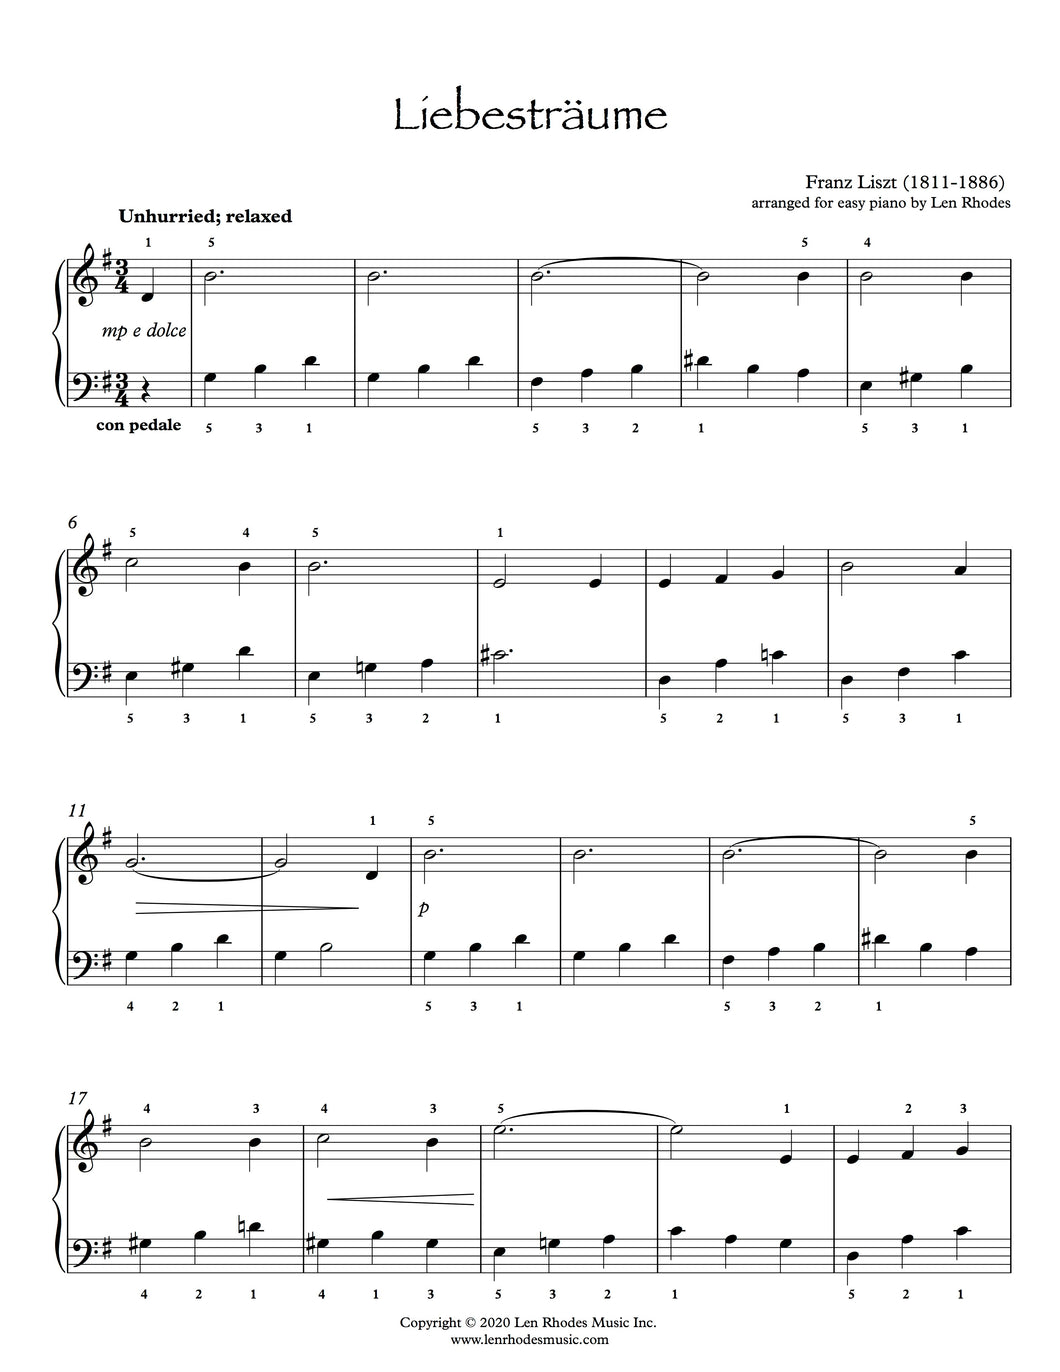 Liebesträume, Liszt - easy Piano